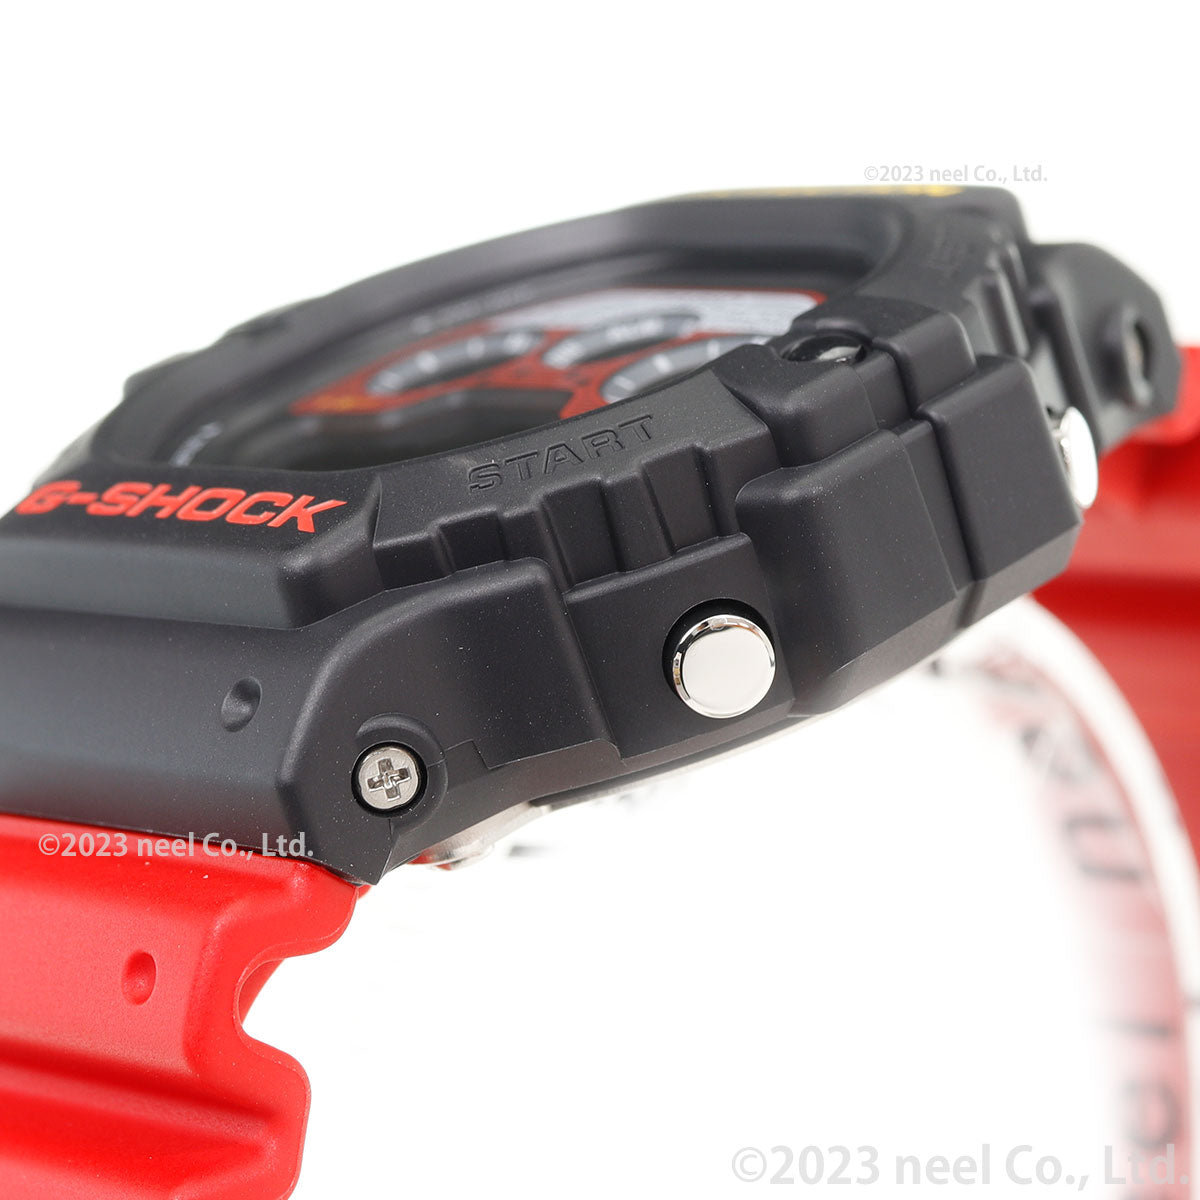 G-SHOCK デジタル カシオ Gショック CASIO オンライン限定モデル 腕時計 メンズ DW-5900MT-1A4JF Mix Tape シリーズ レッド